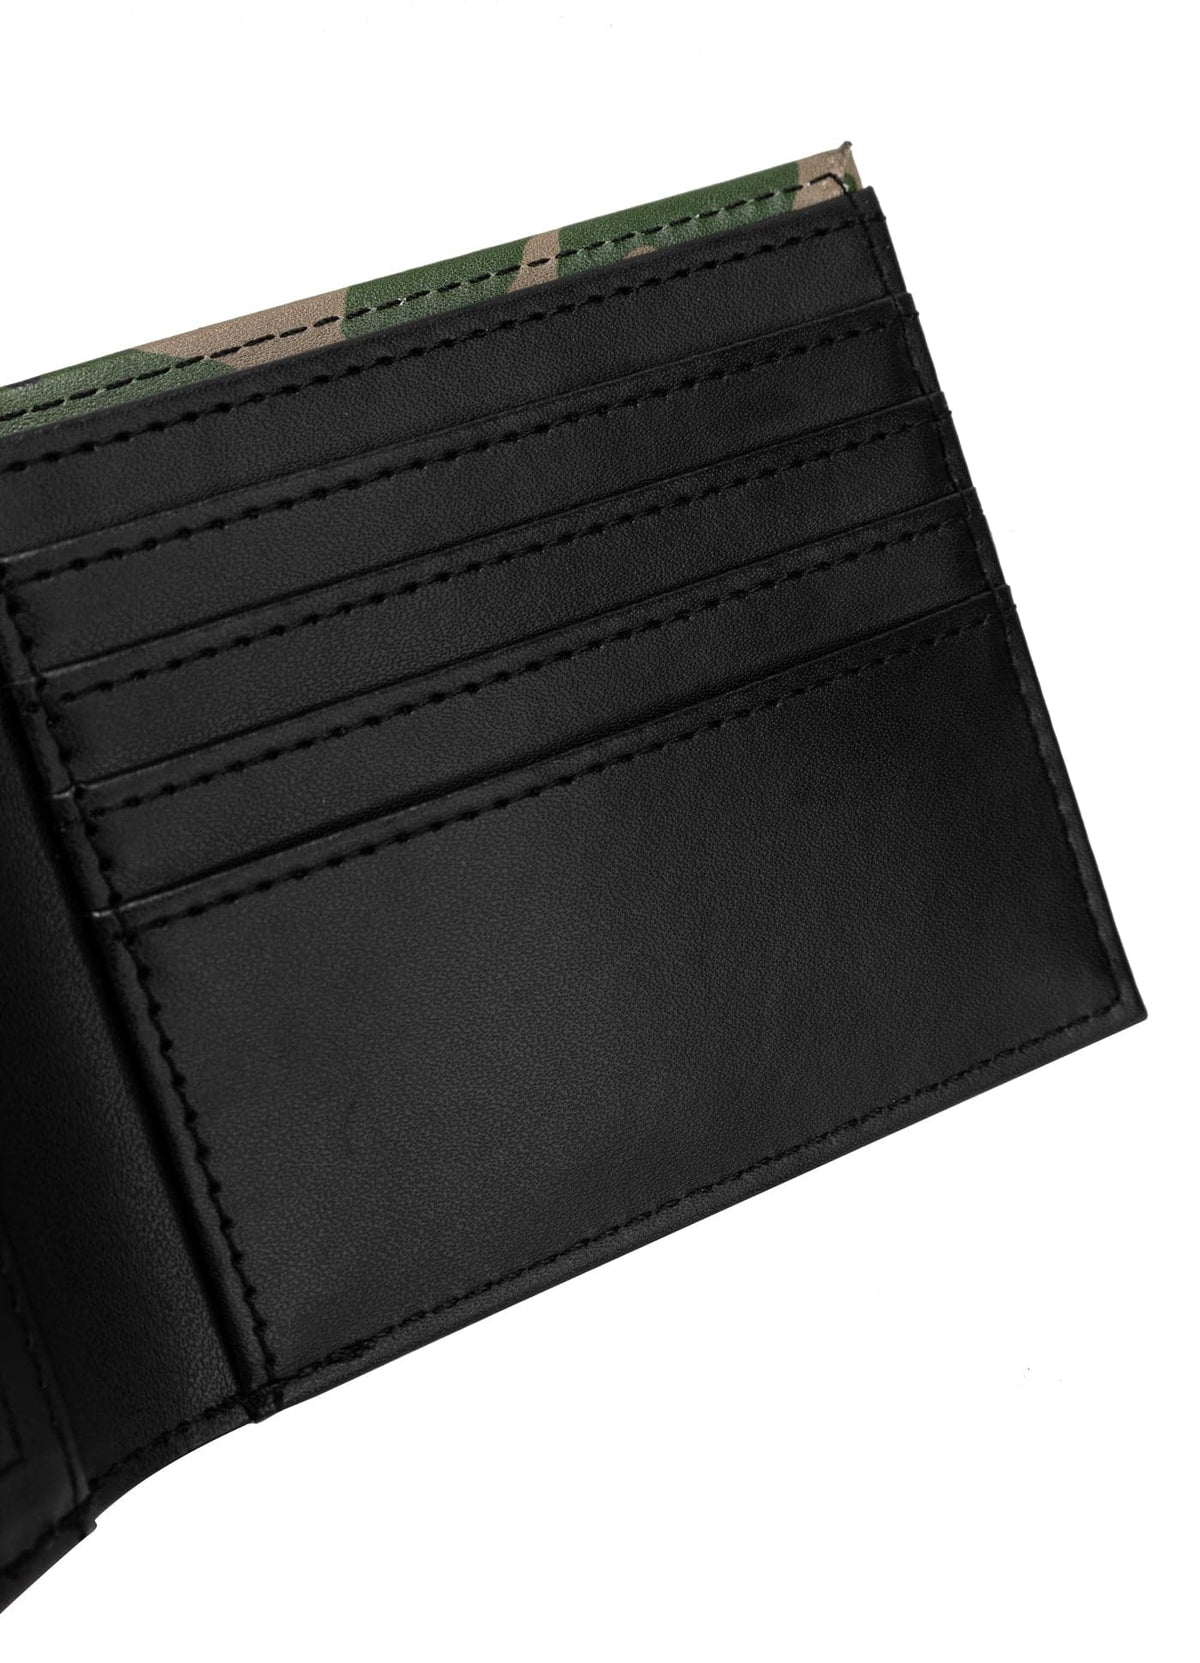 CROSS CAMO Woodland Leather Wallet - Pitbullstore.eu